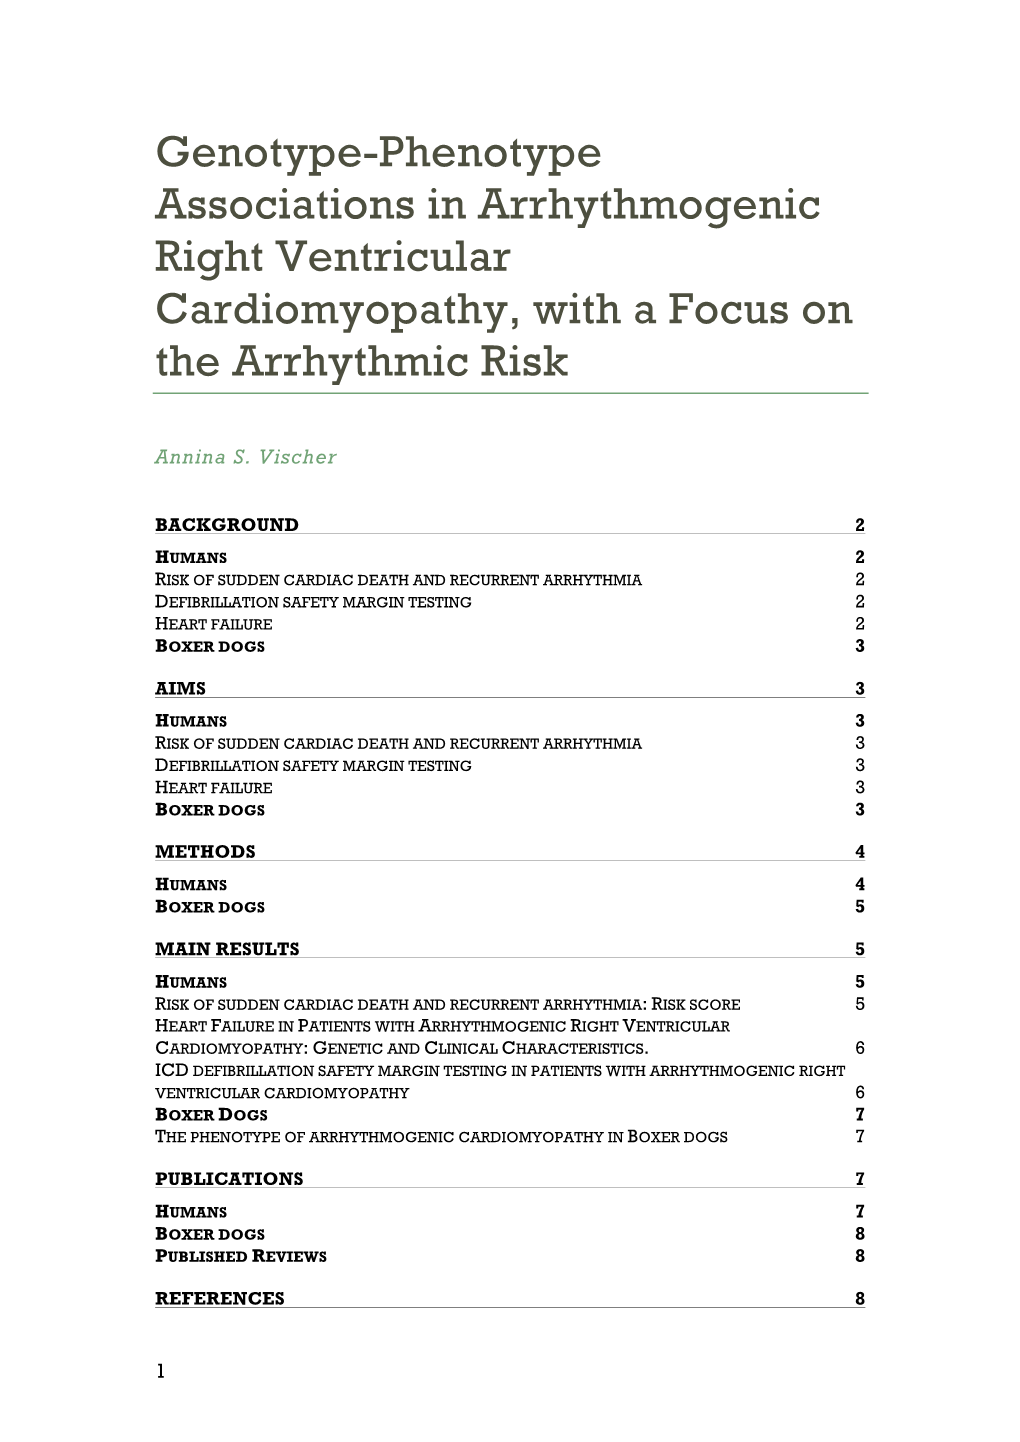 Genotype-Phenotype Associations in Arrhythmogenic Right Ventricular Cardiomyopathy, with a Focus on the Arrhythmic Risk